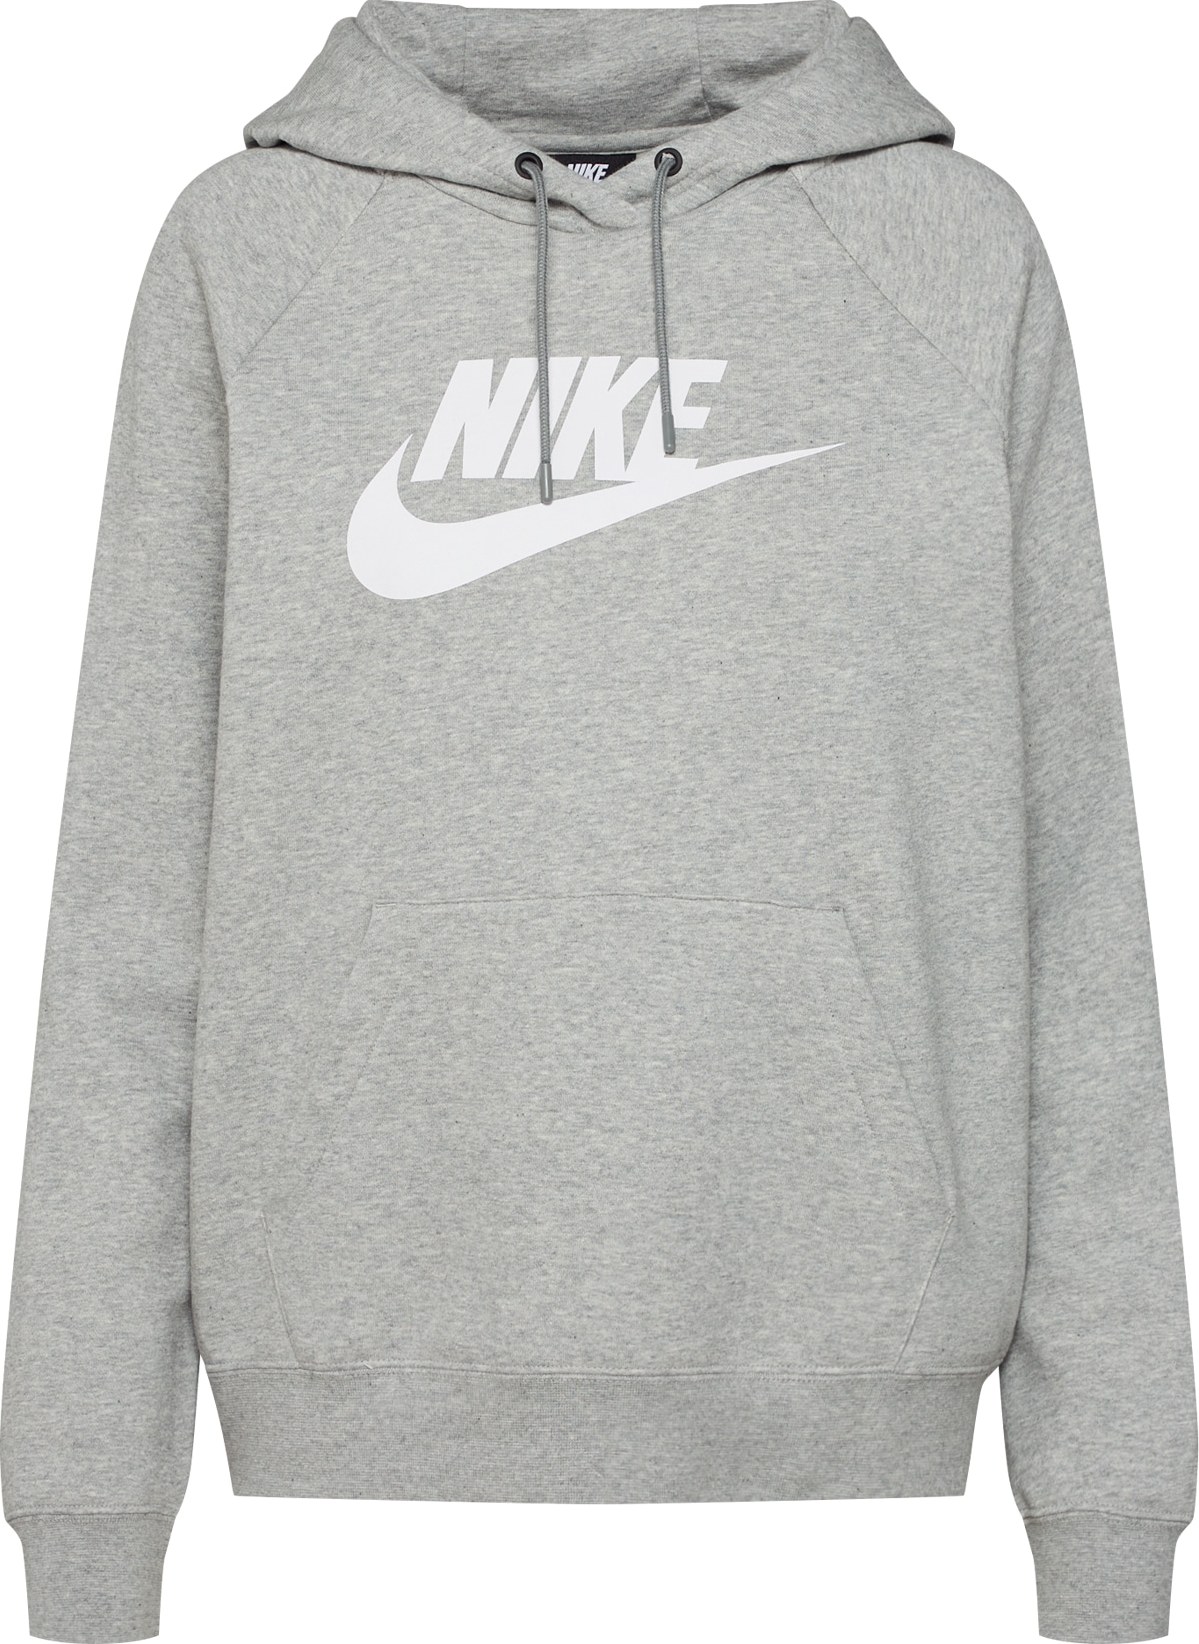 Mikina Nike Sportswear šedá